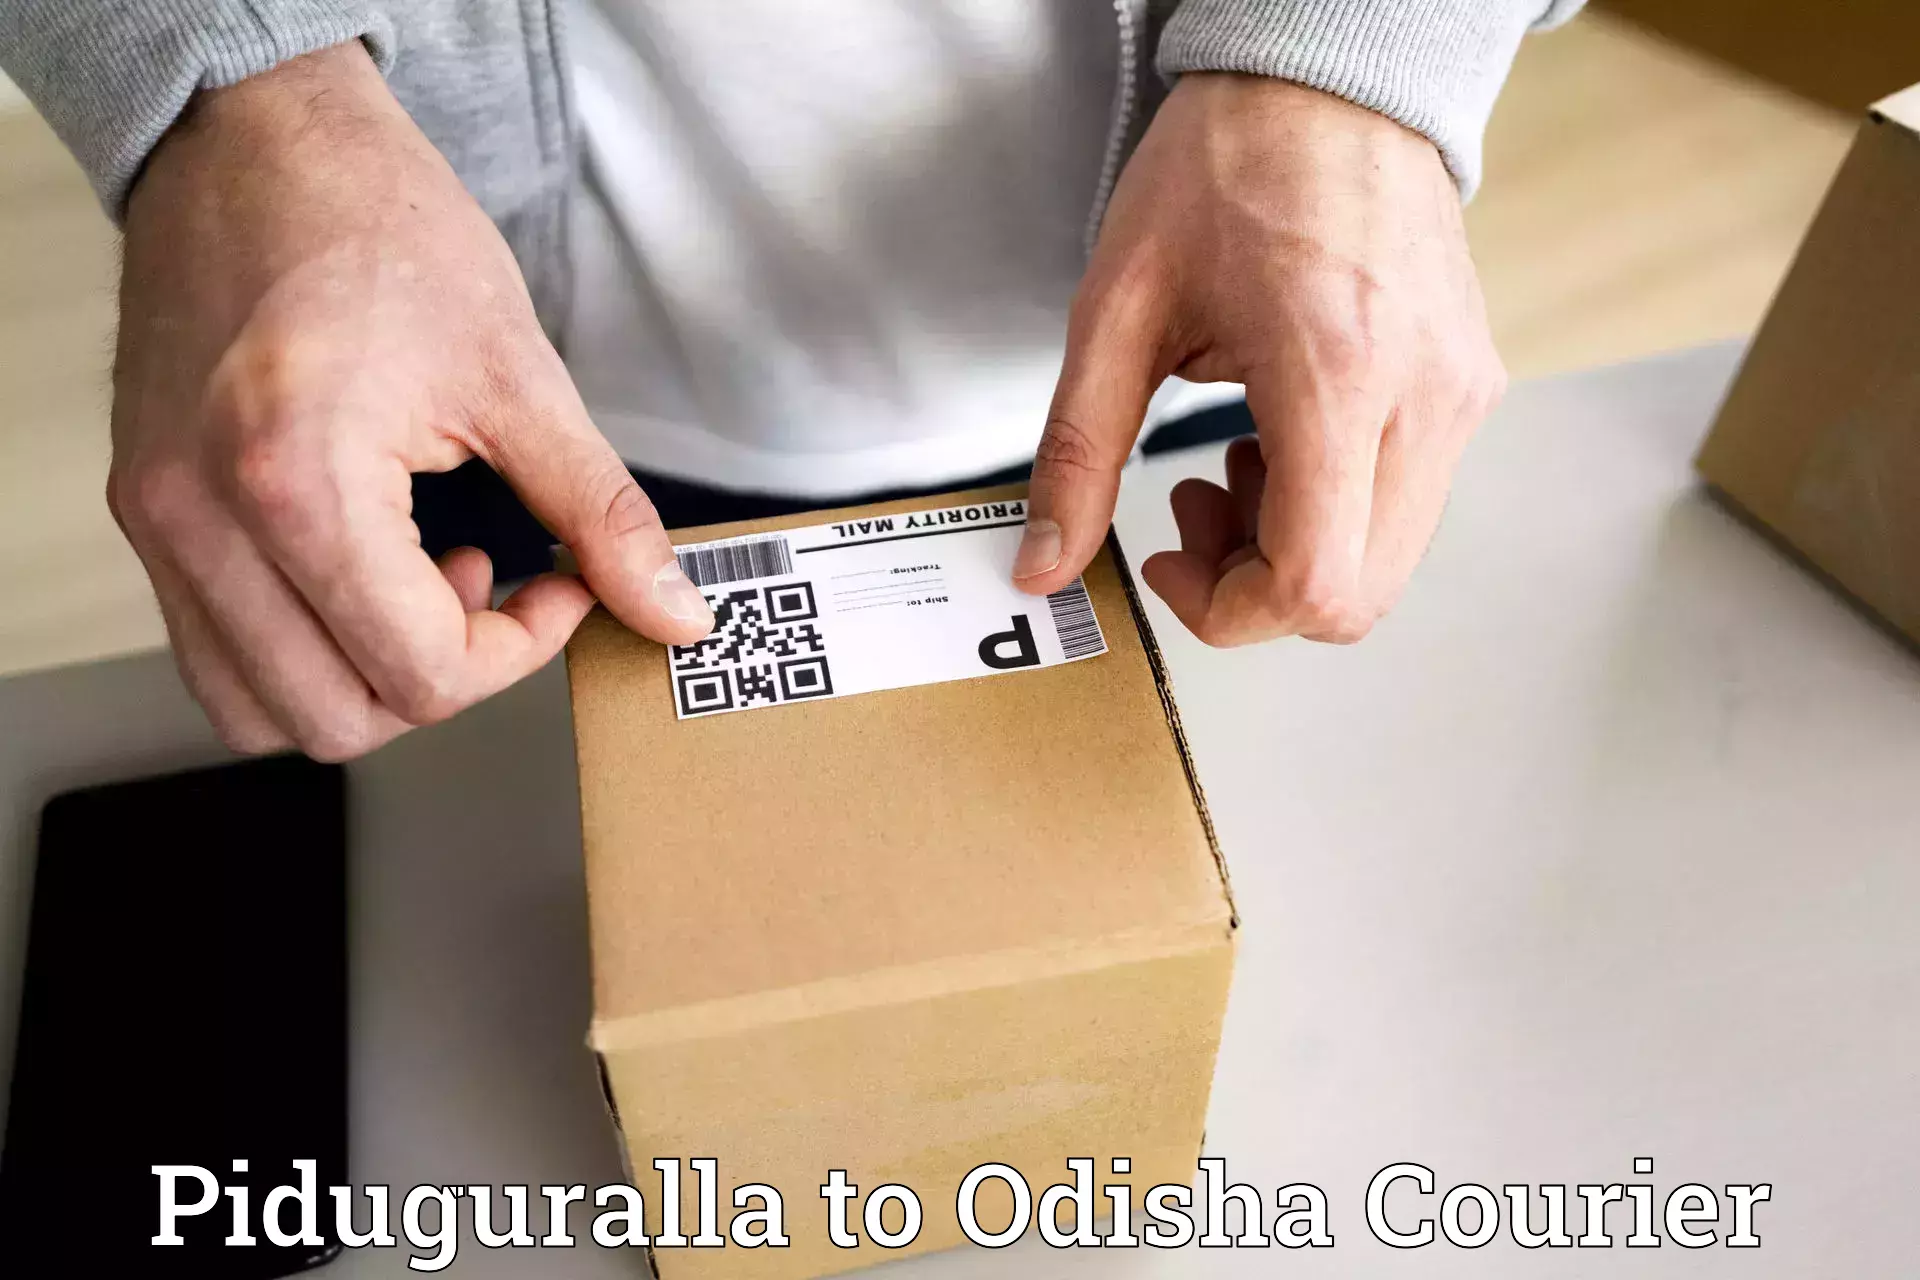 Courier app Piduguralla to Loisingha